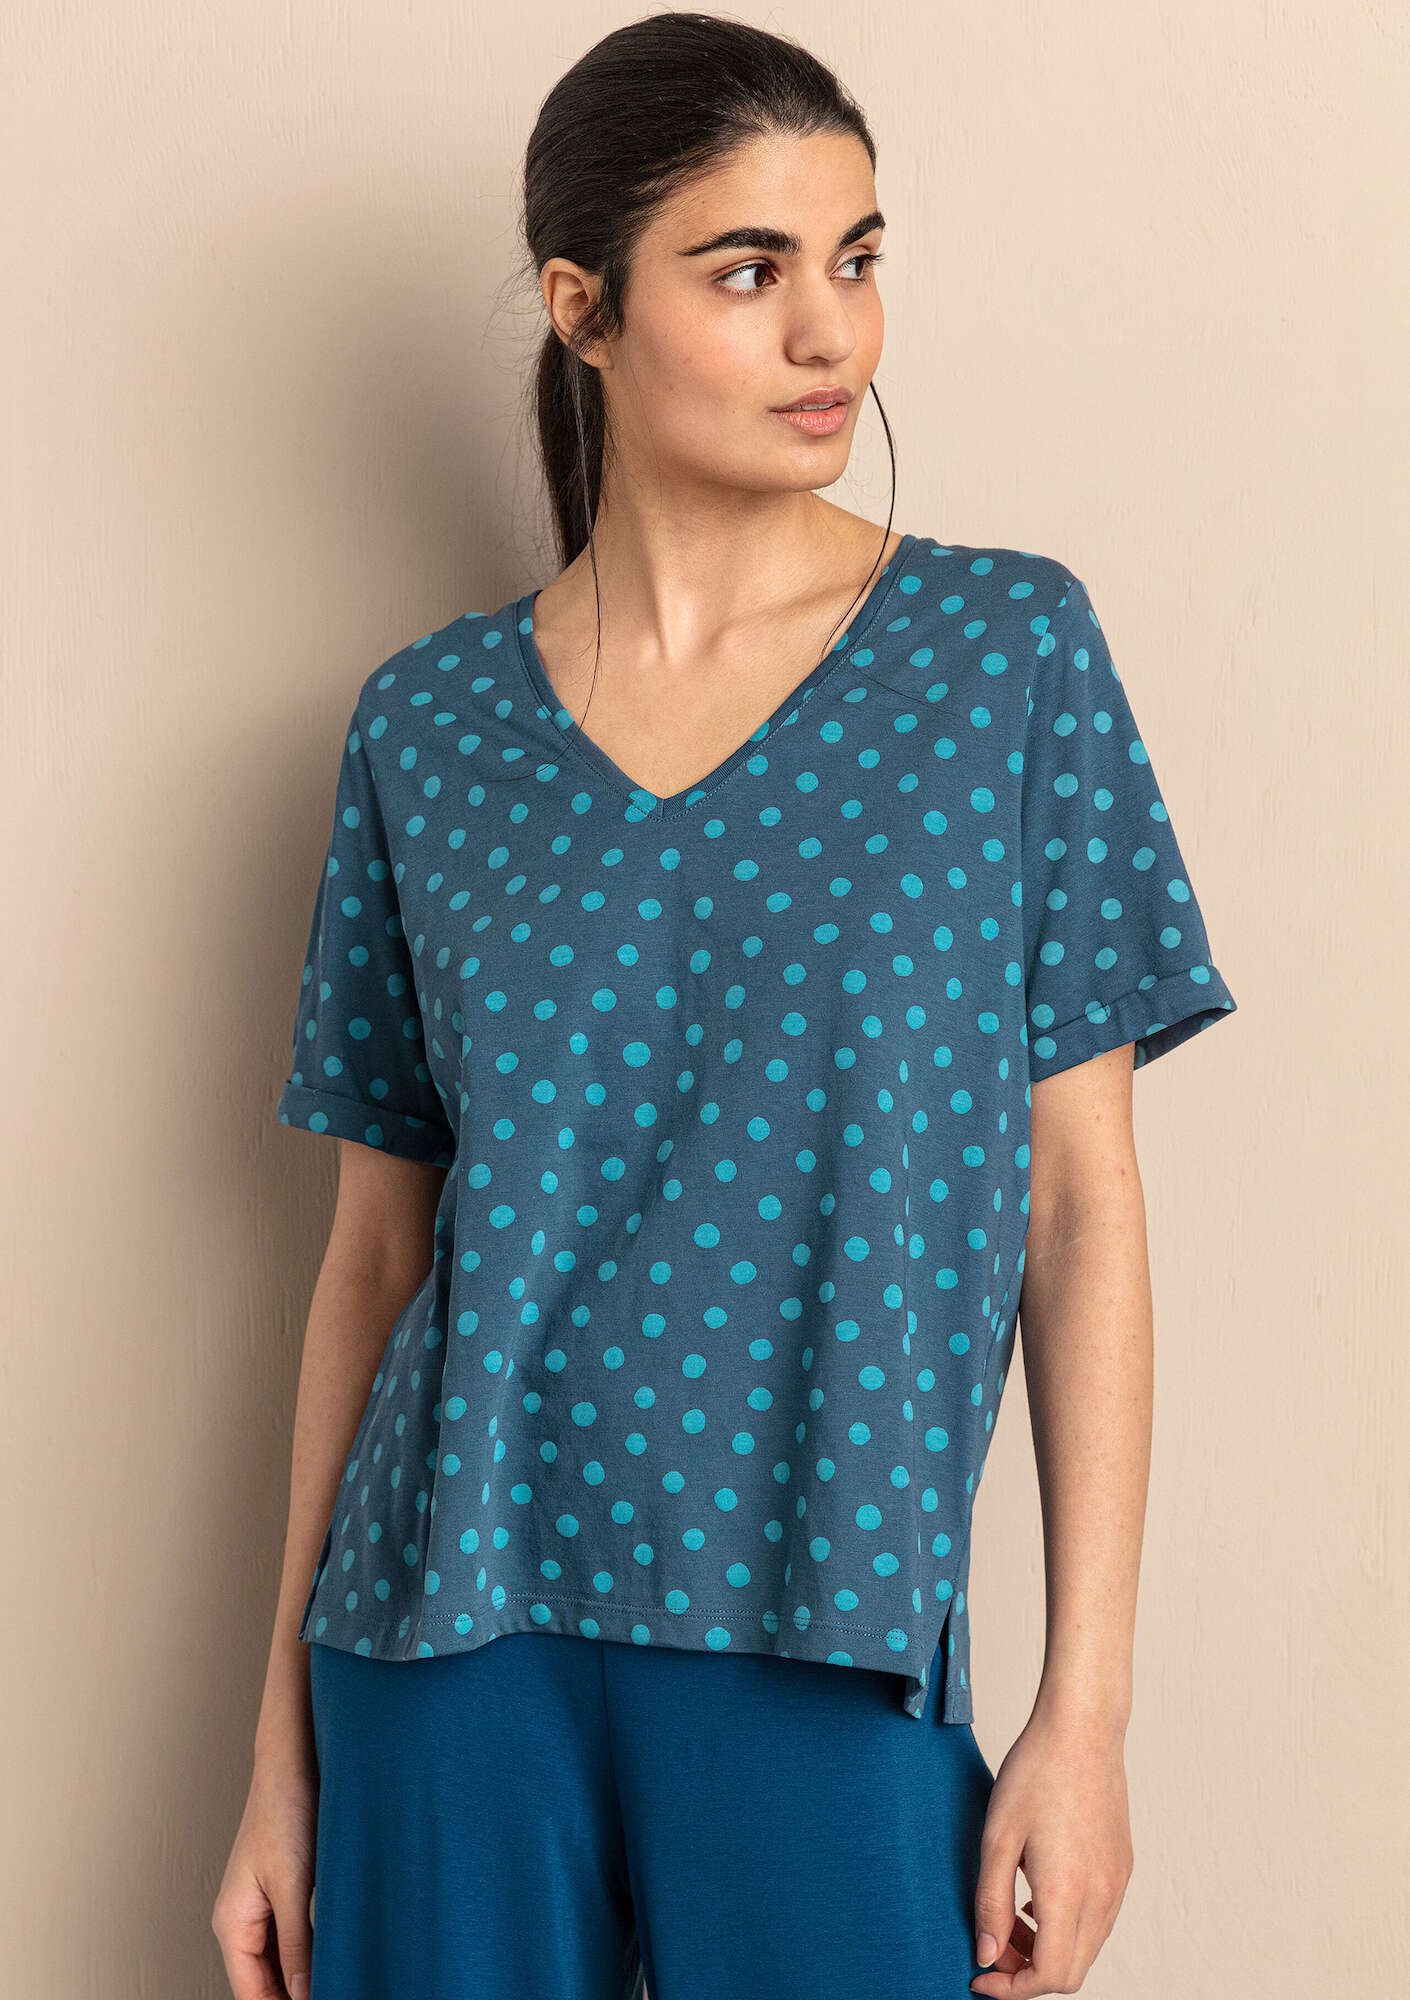 “Juliet” jersey top in organic cotton/modal indigo/patterned